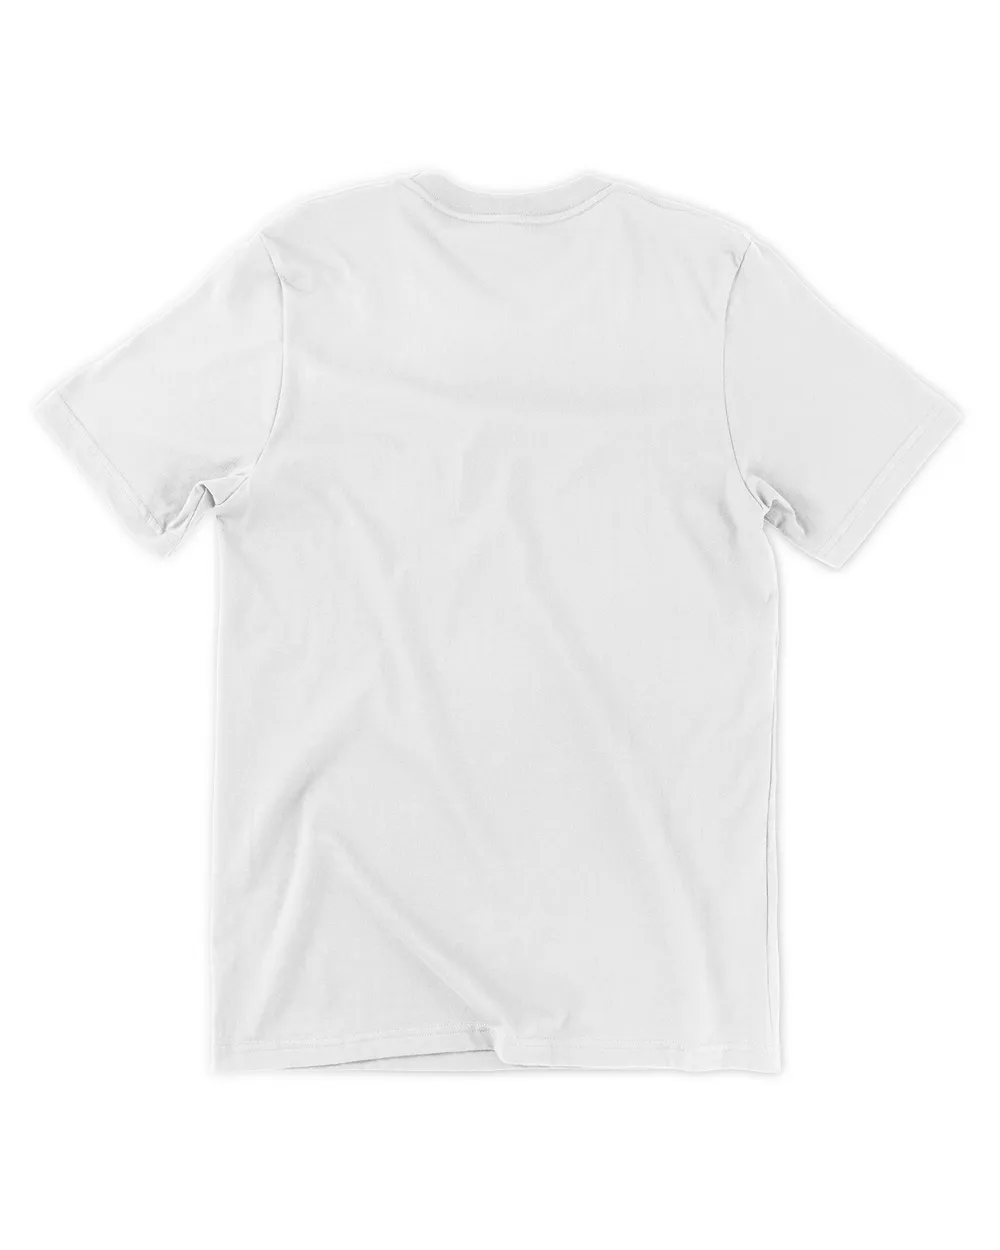 3Landers T-Shirt